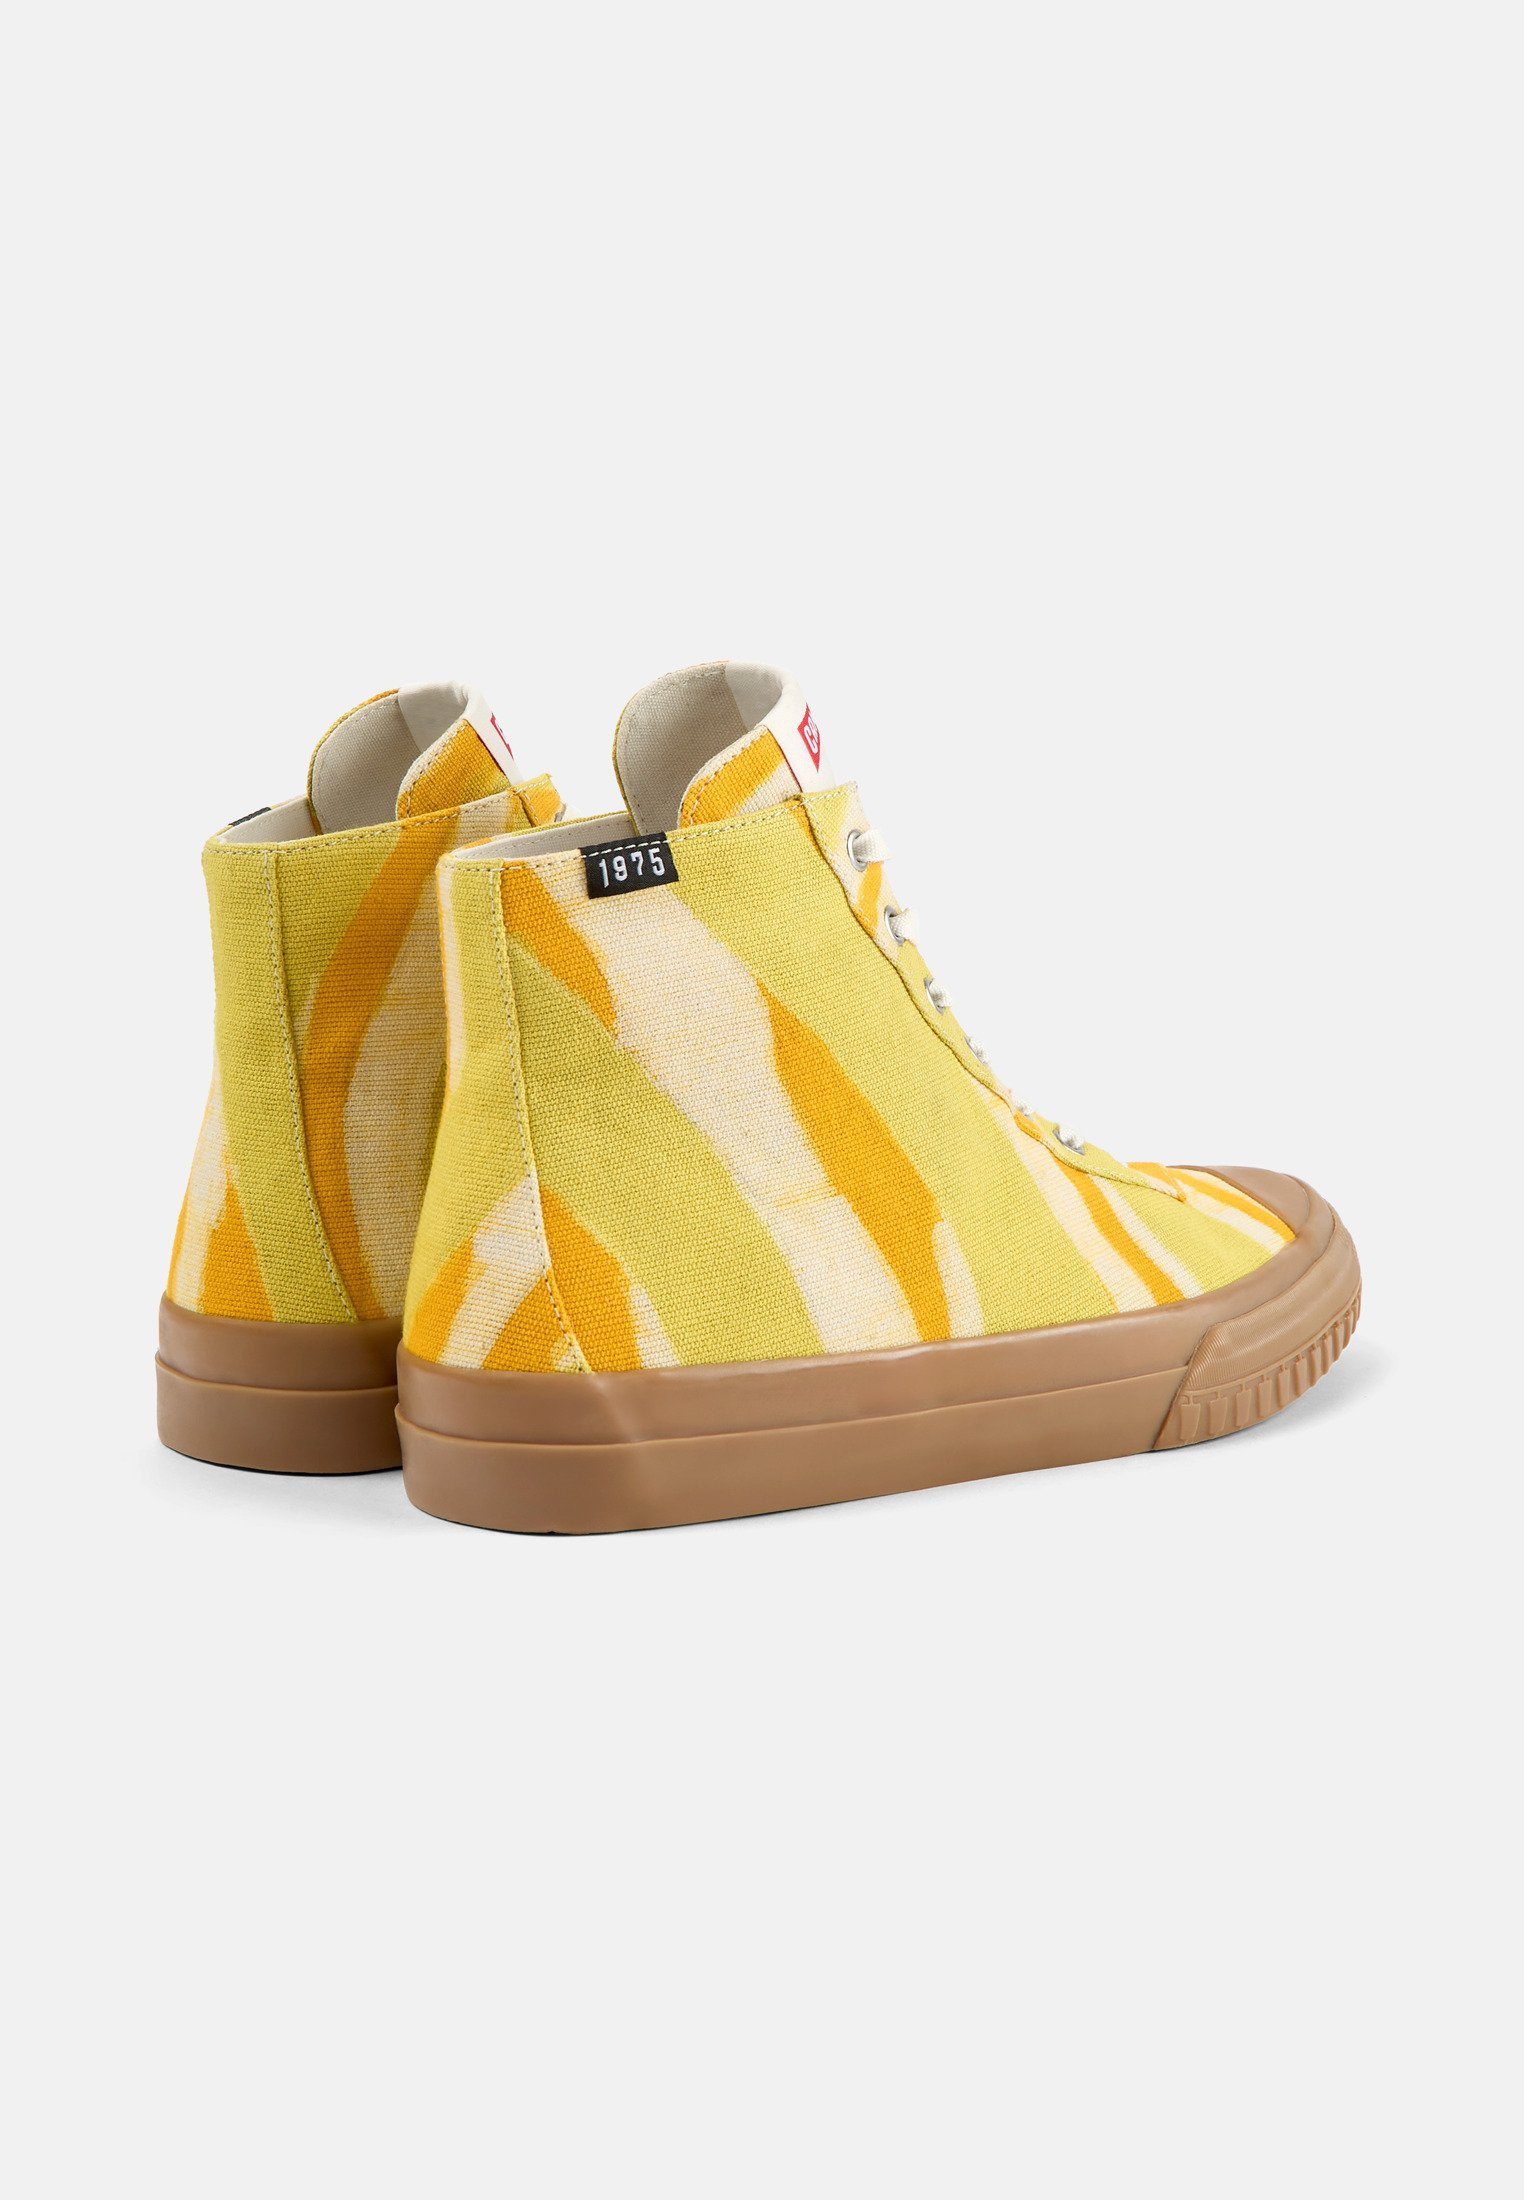 / Weiss CAMALEON / 1975 Orange Gelb Sneaker Camper